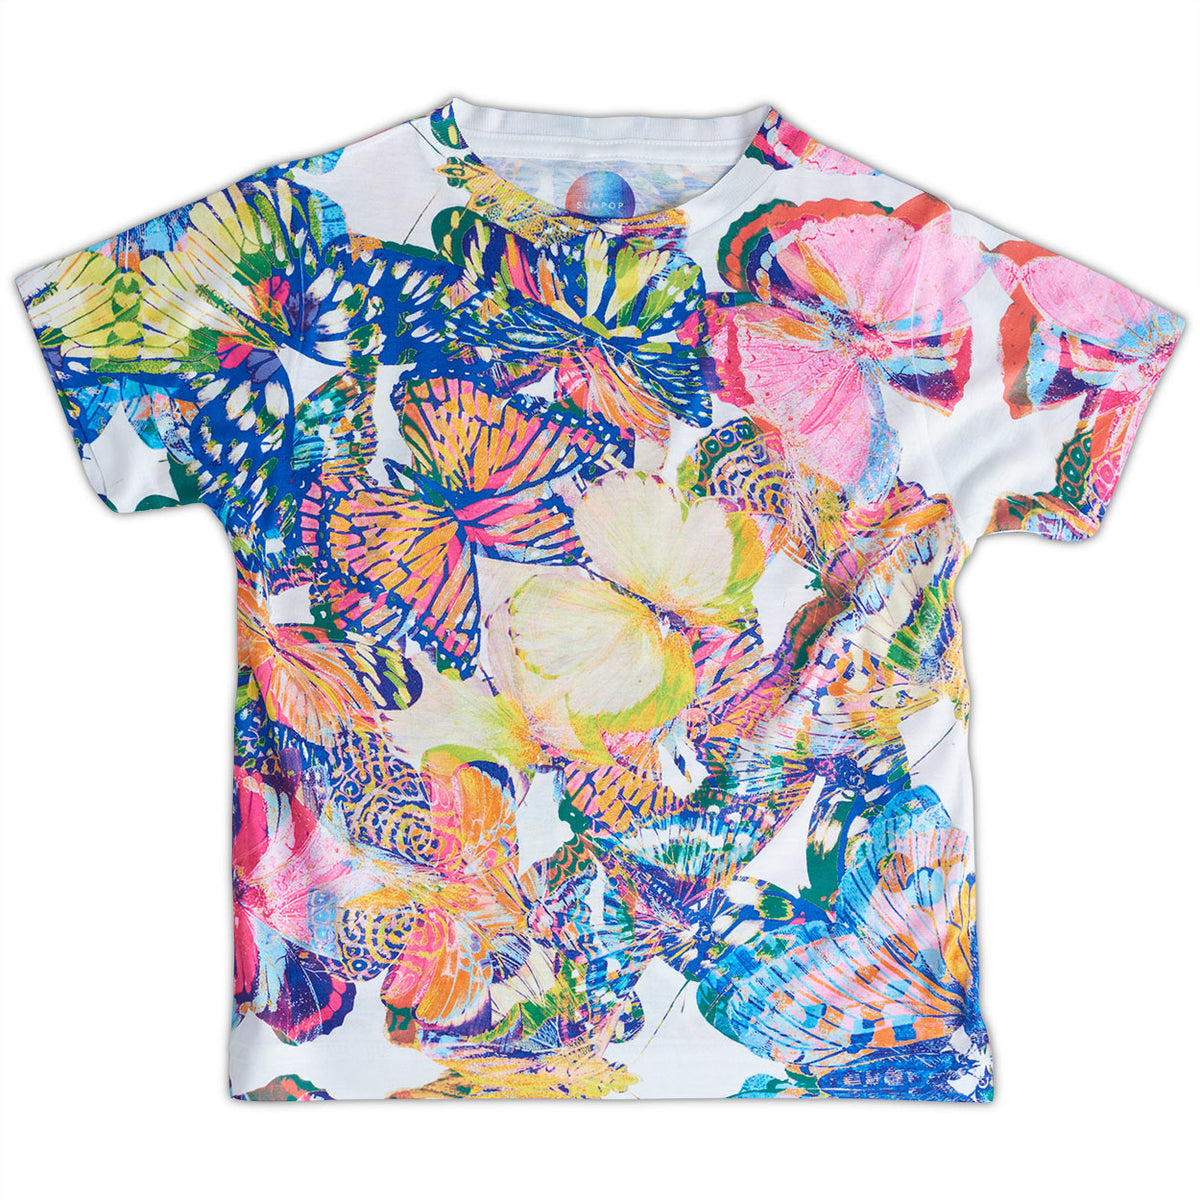 Girls Kaleidoscope Graphic Shirt Size Xs L Yellow Orange Blue Butterflies Opaline World Sunpoplife